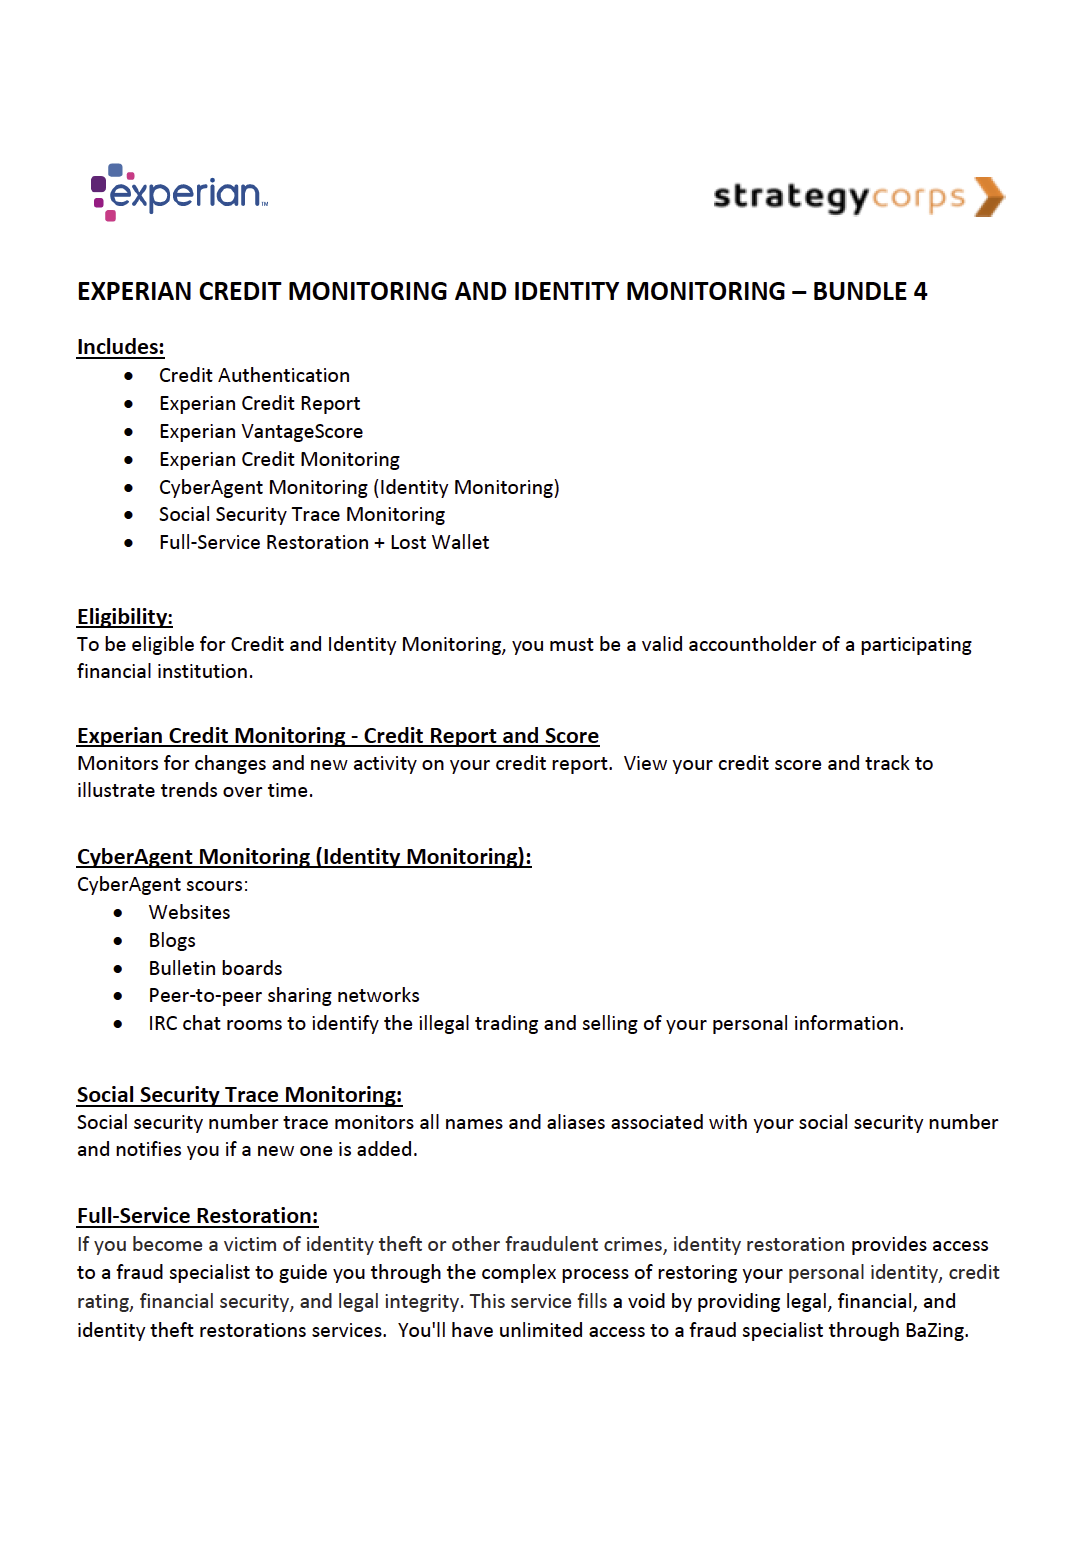 Experian Credit & Identity Monitoring - Bundle 4